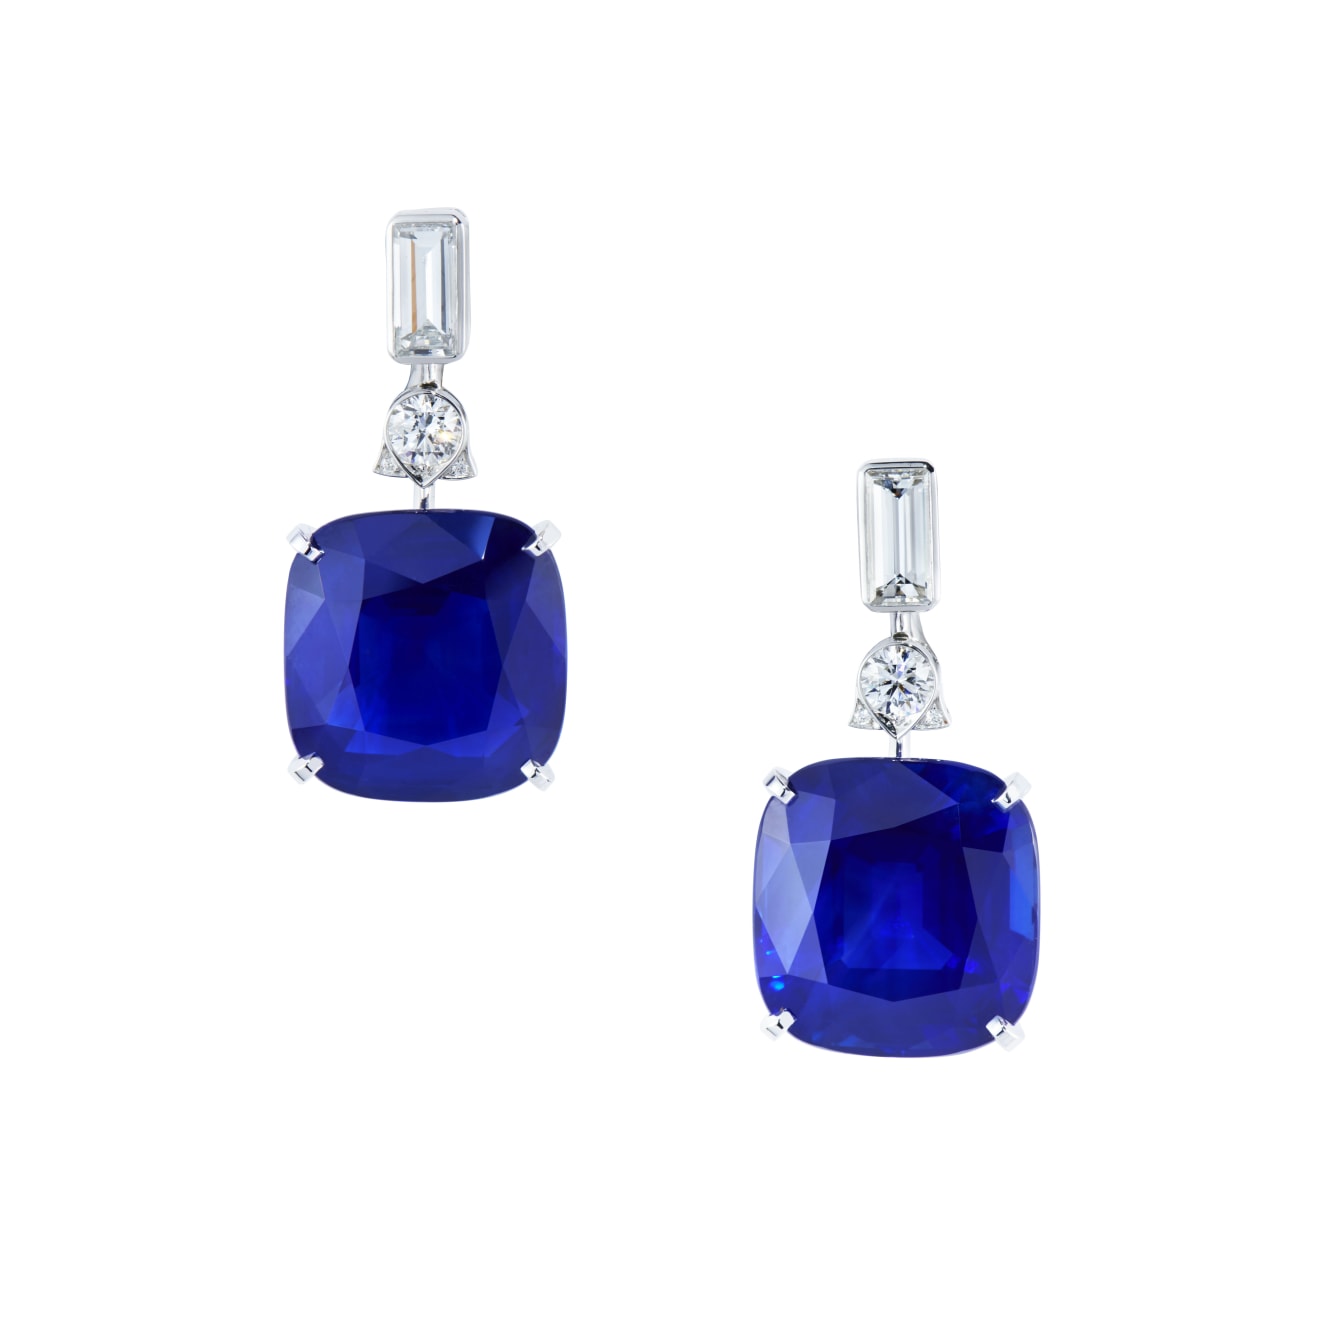 Kashmir sapphire and diamond earrings 